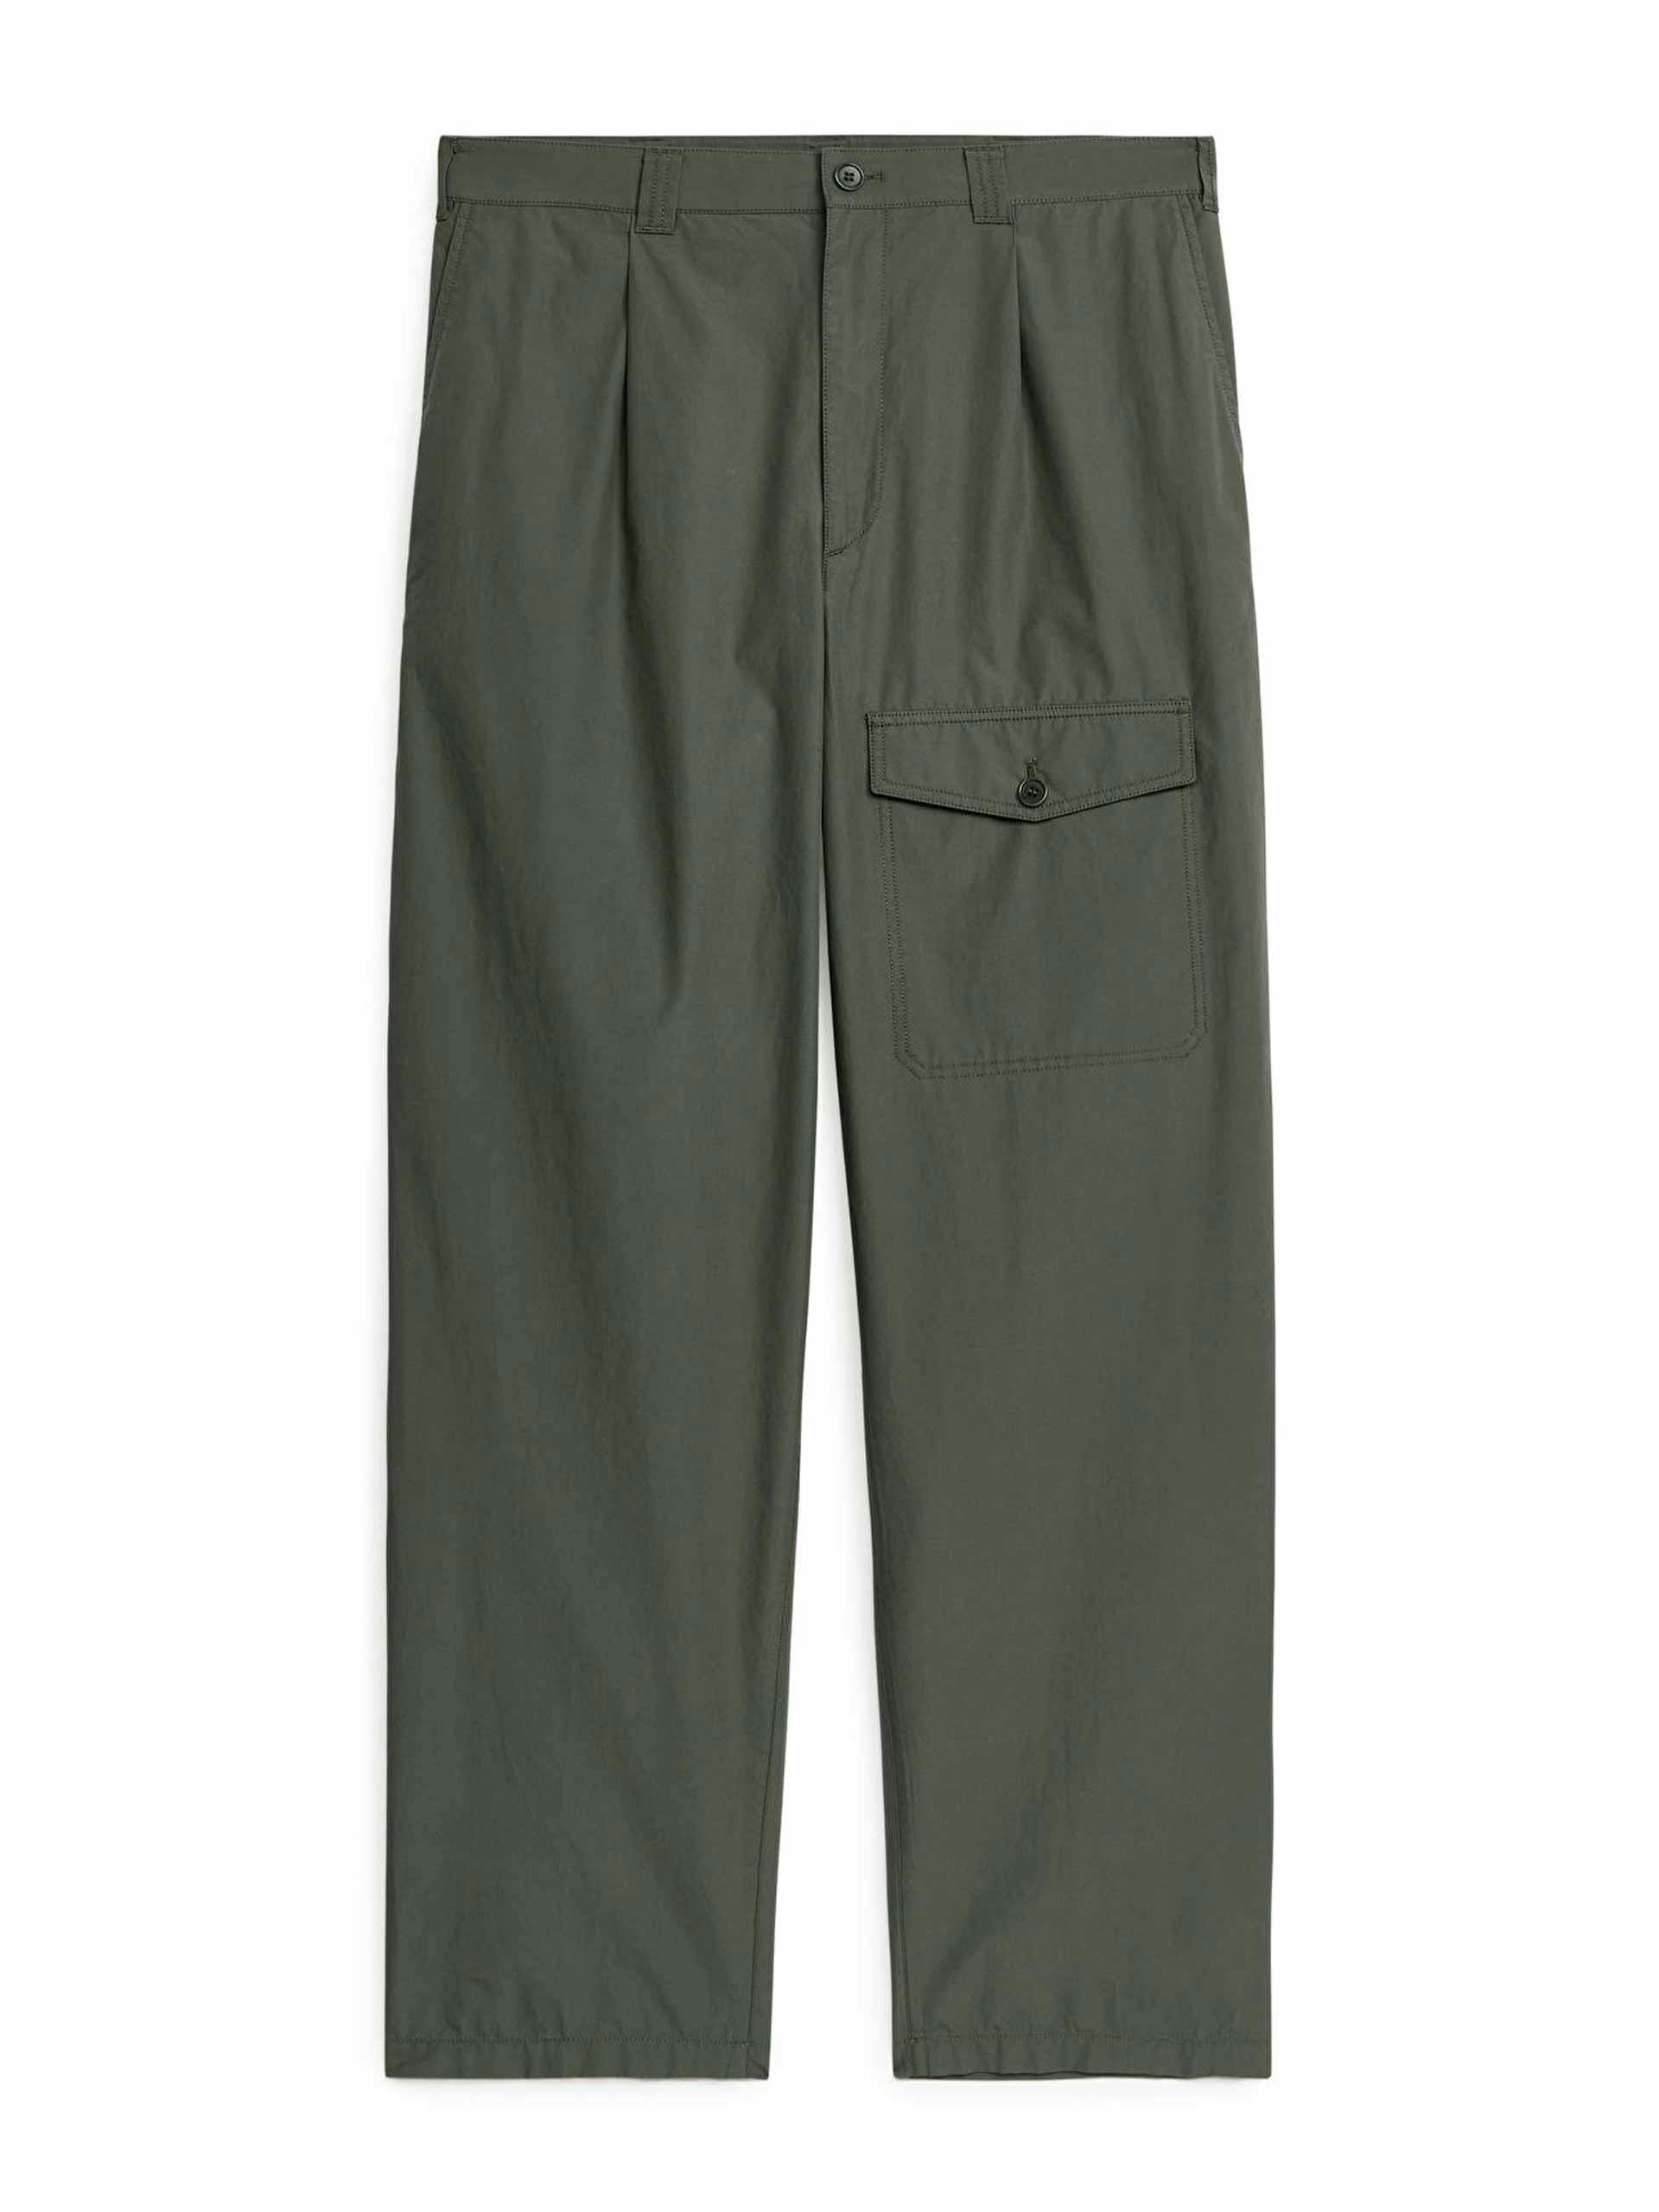 Khaki wide utility trousers